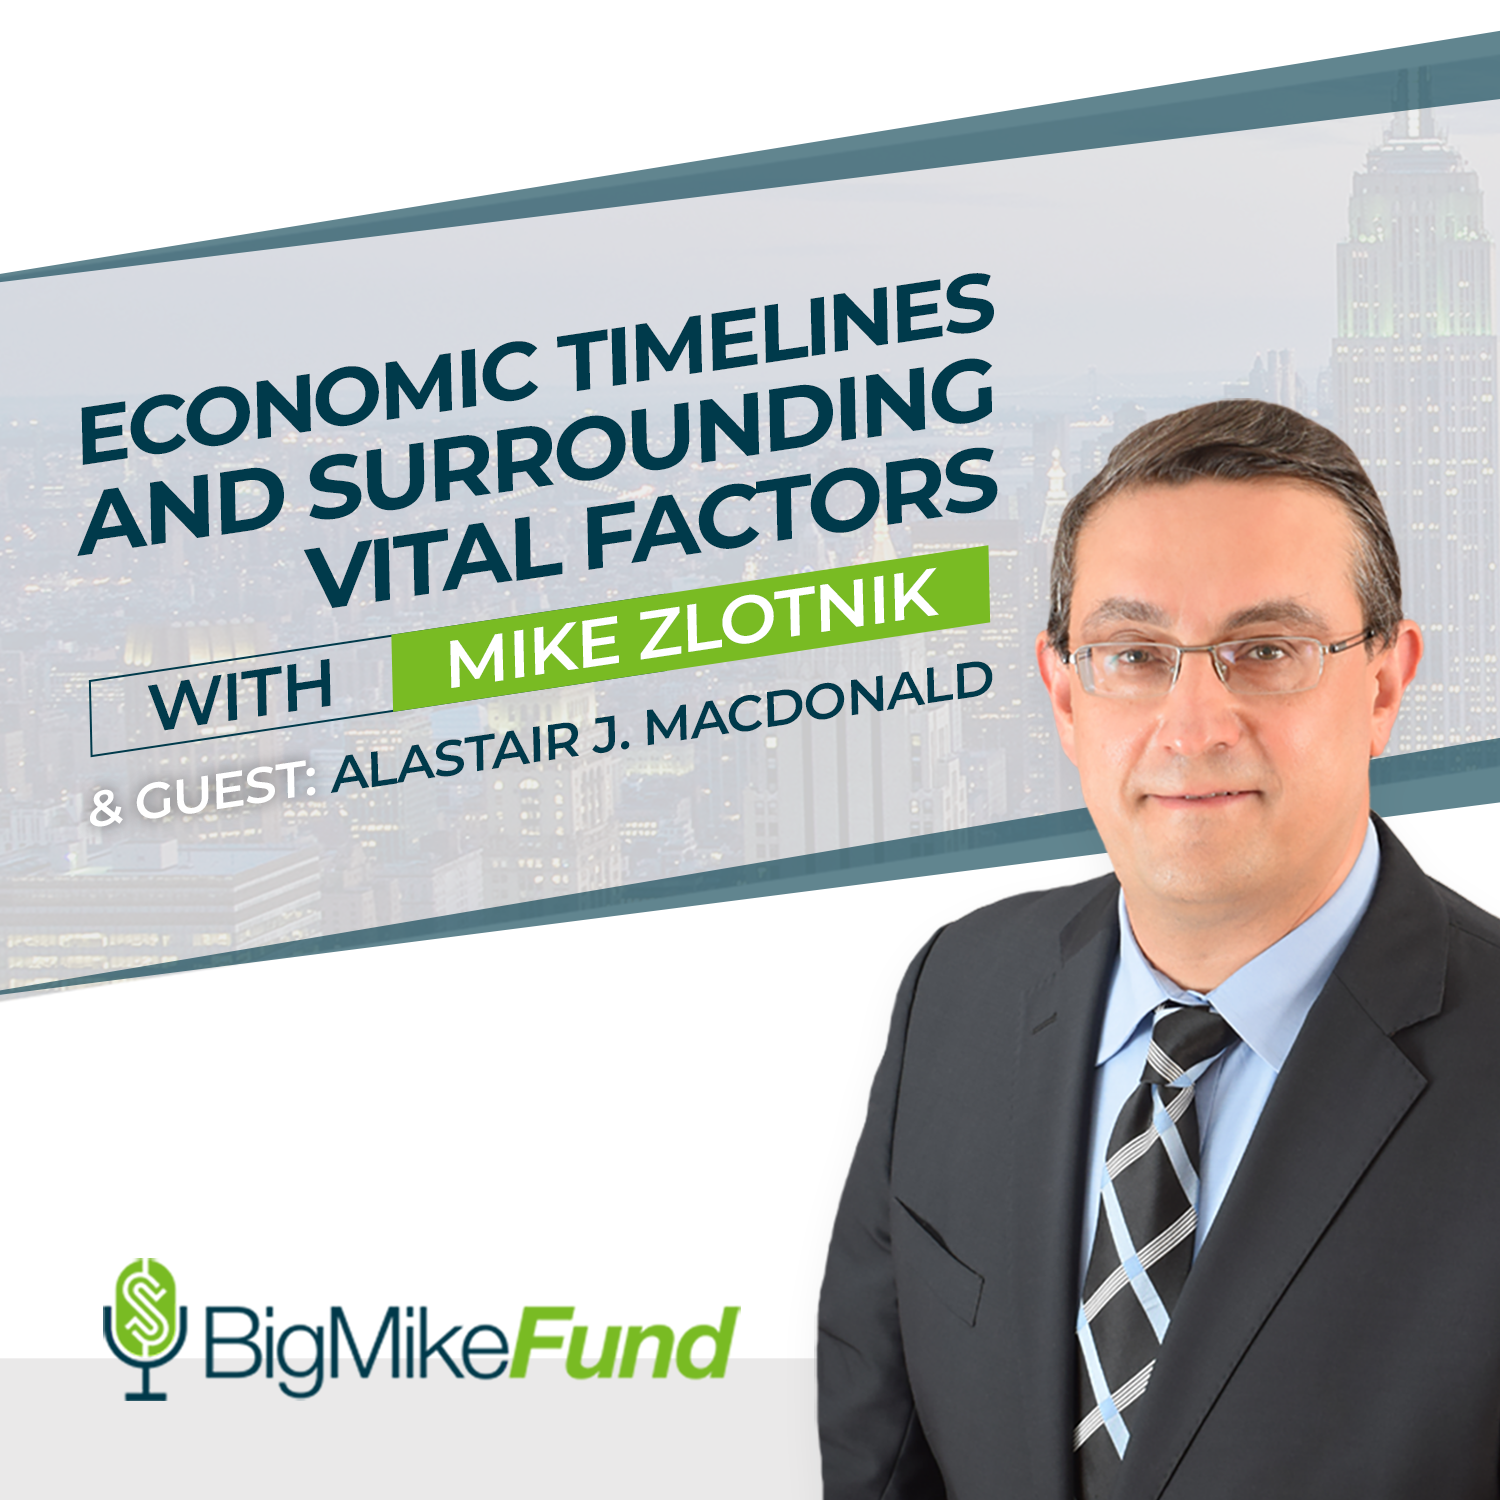 096: Economic Timelines and Surrounding Vital Factors with Alastair J. Macdonald